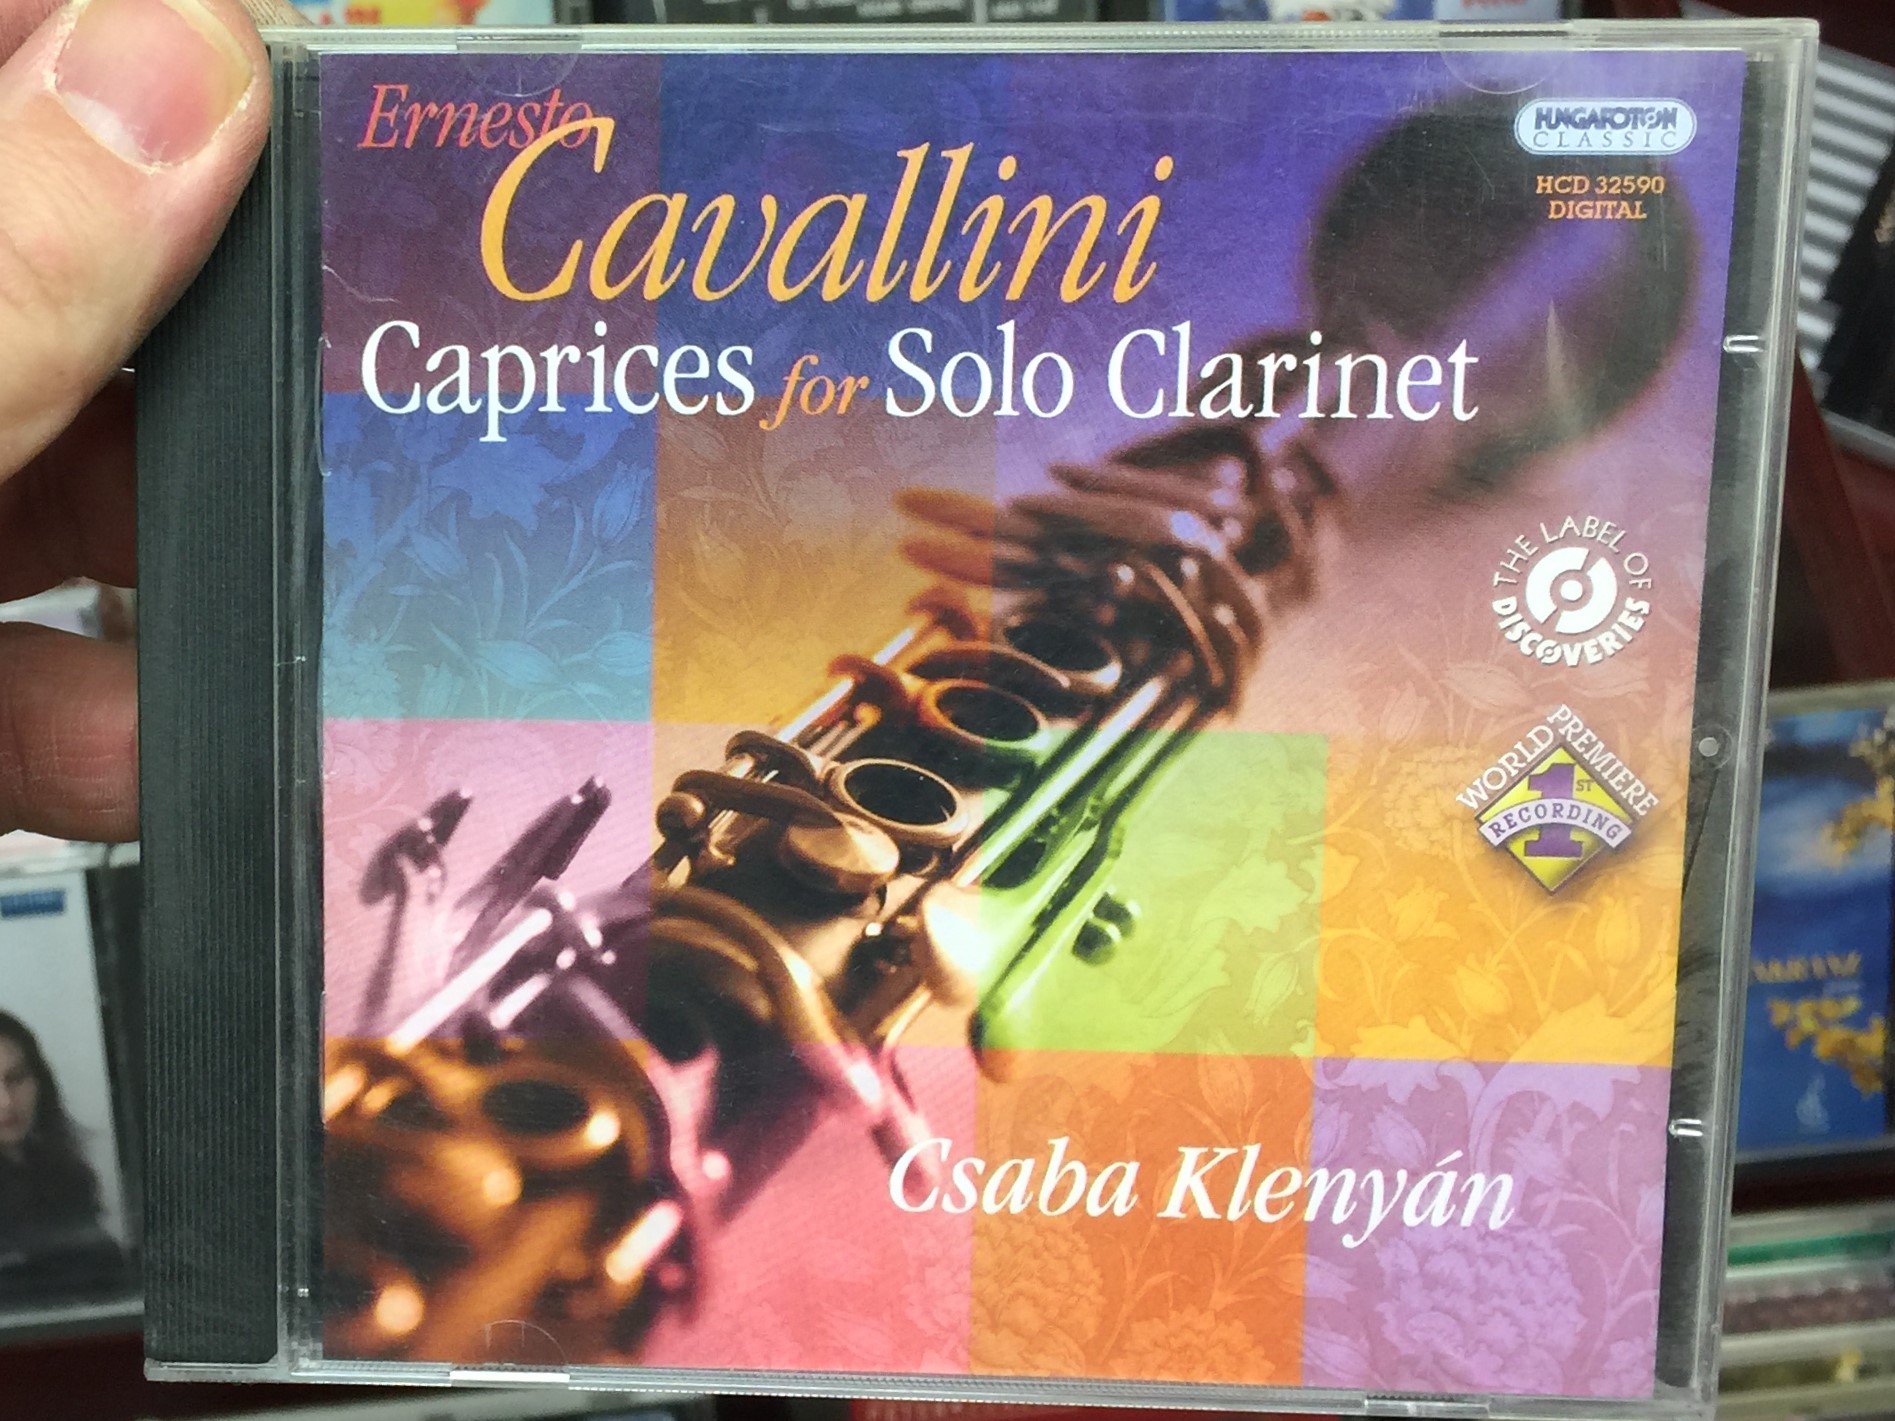 ernesto-cavallini-caprices-for-solo-clarinet-csaba-klenyan-hungaroton-classic-audio-cd-2008-stereo-hcd-32590-1-.jpg